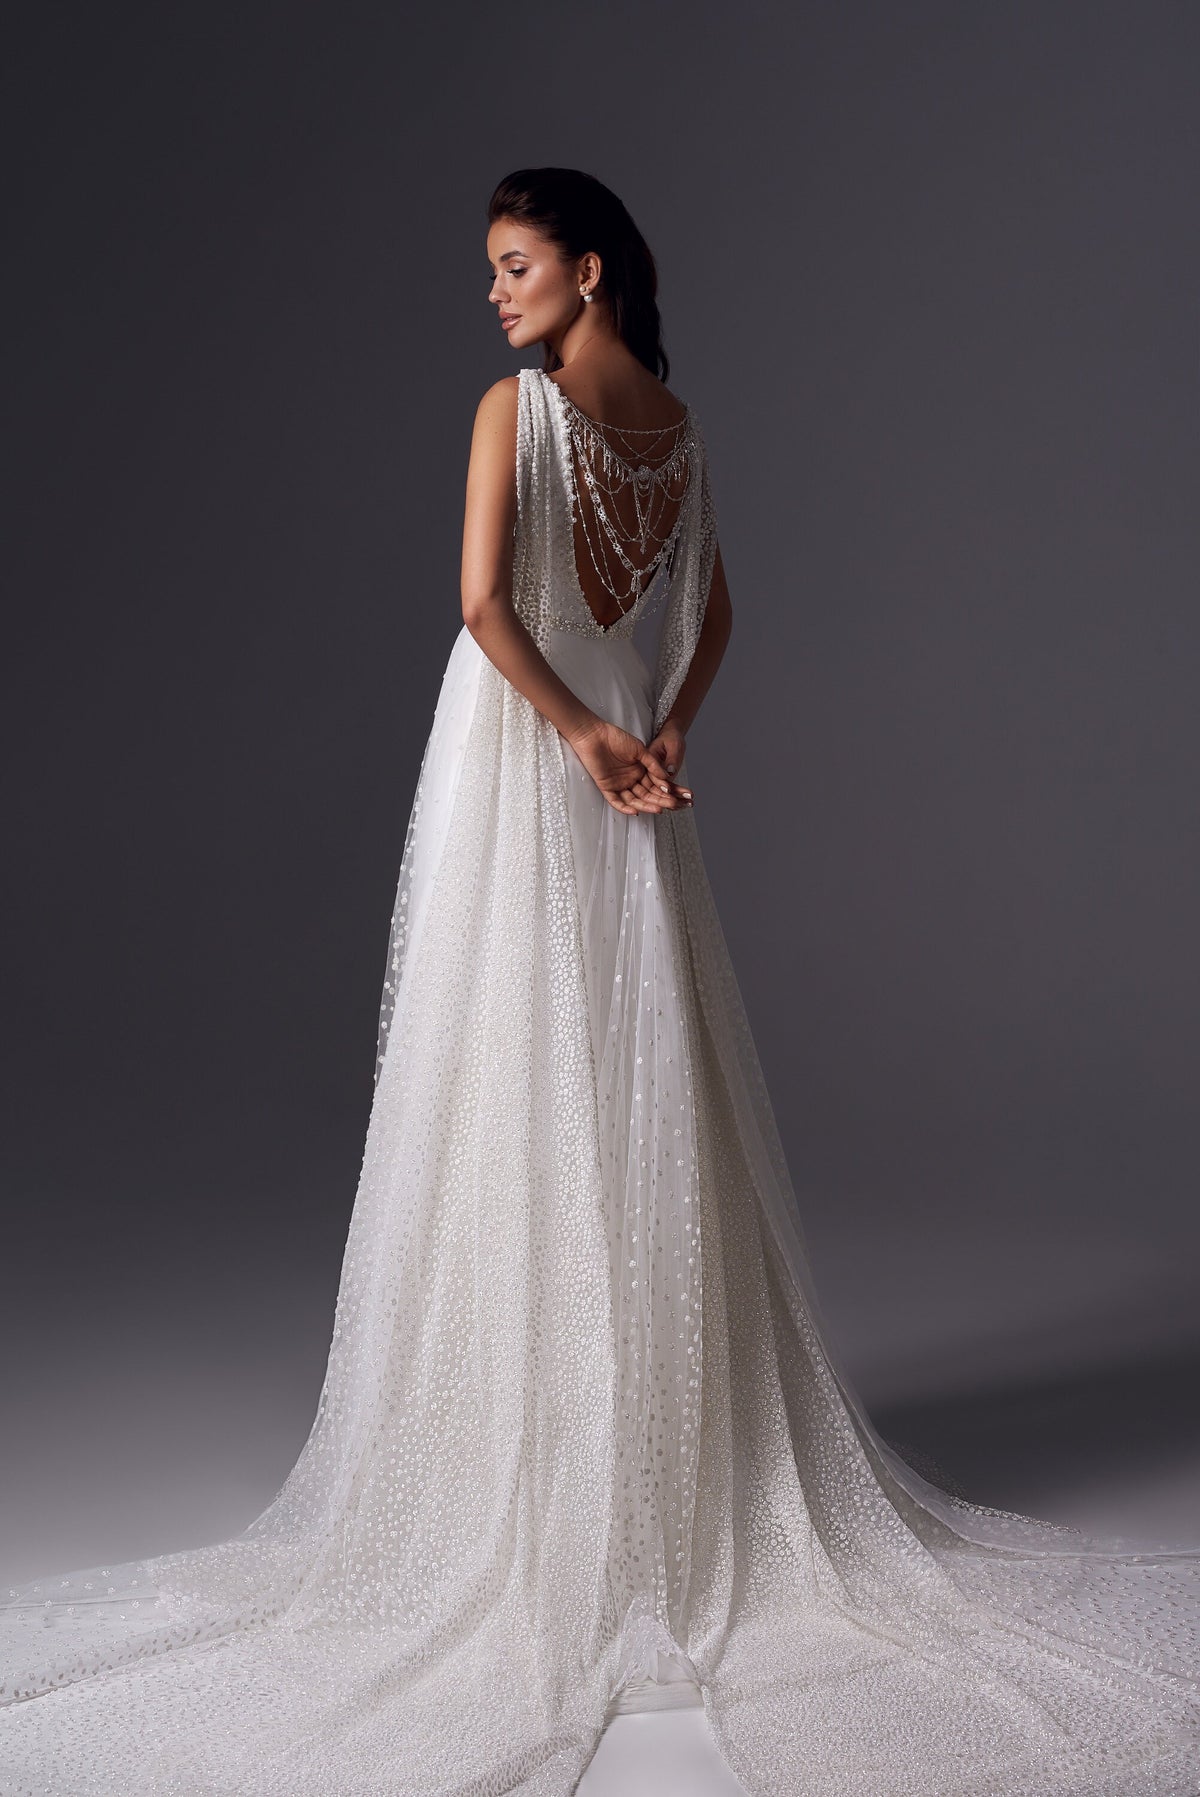 Polka Dot Sparkle Open Beaded Back Sleeveless ALine Wedding Dress Bridal Gown Detachable Cape Veil Plus Size Custom